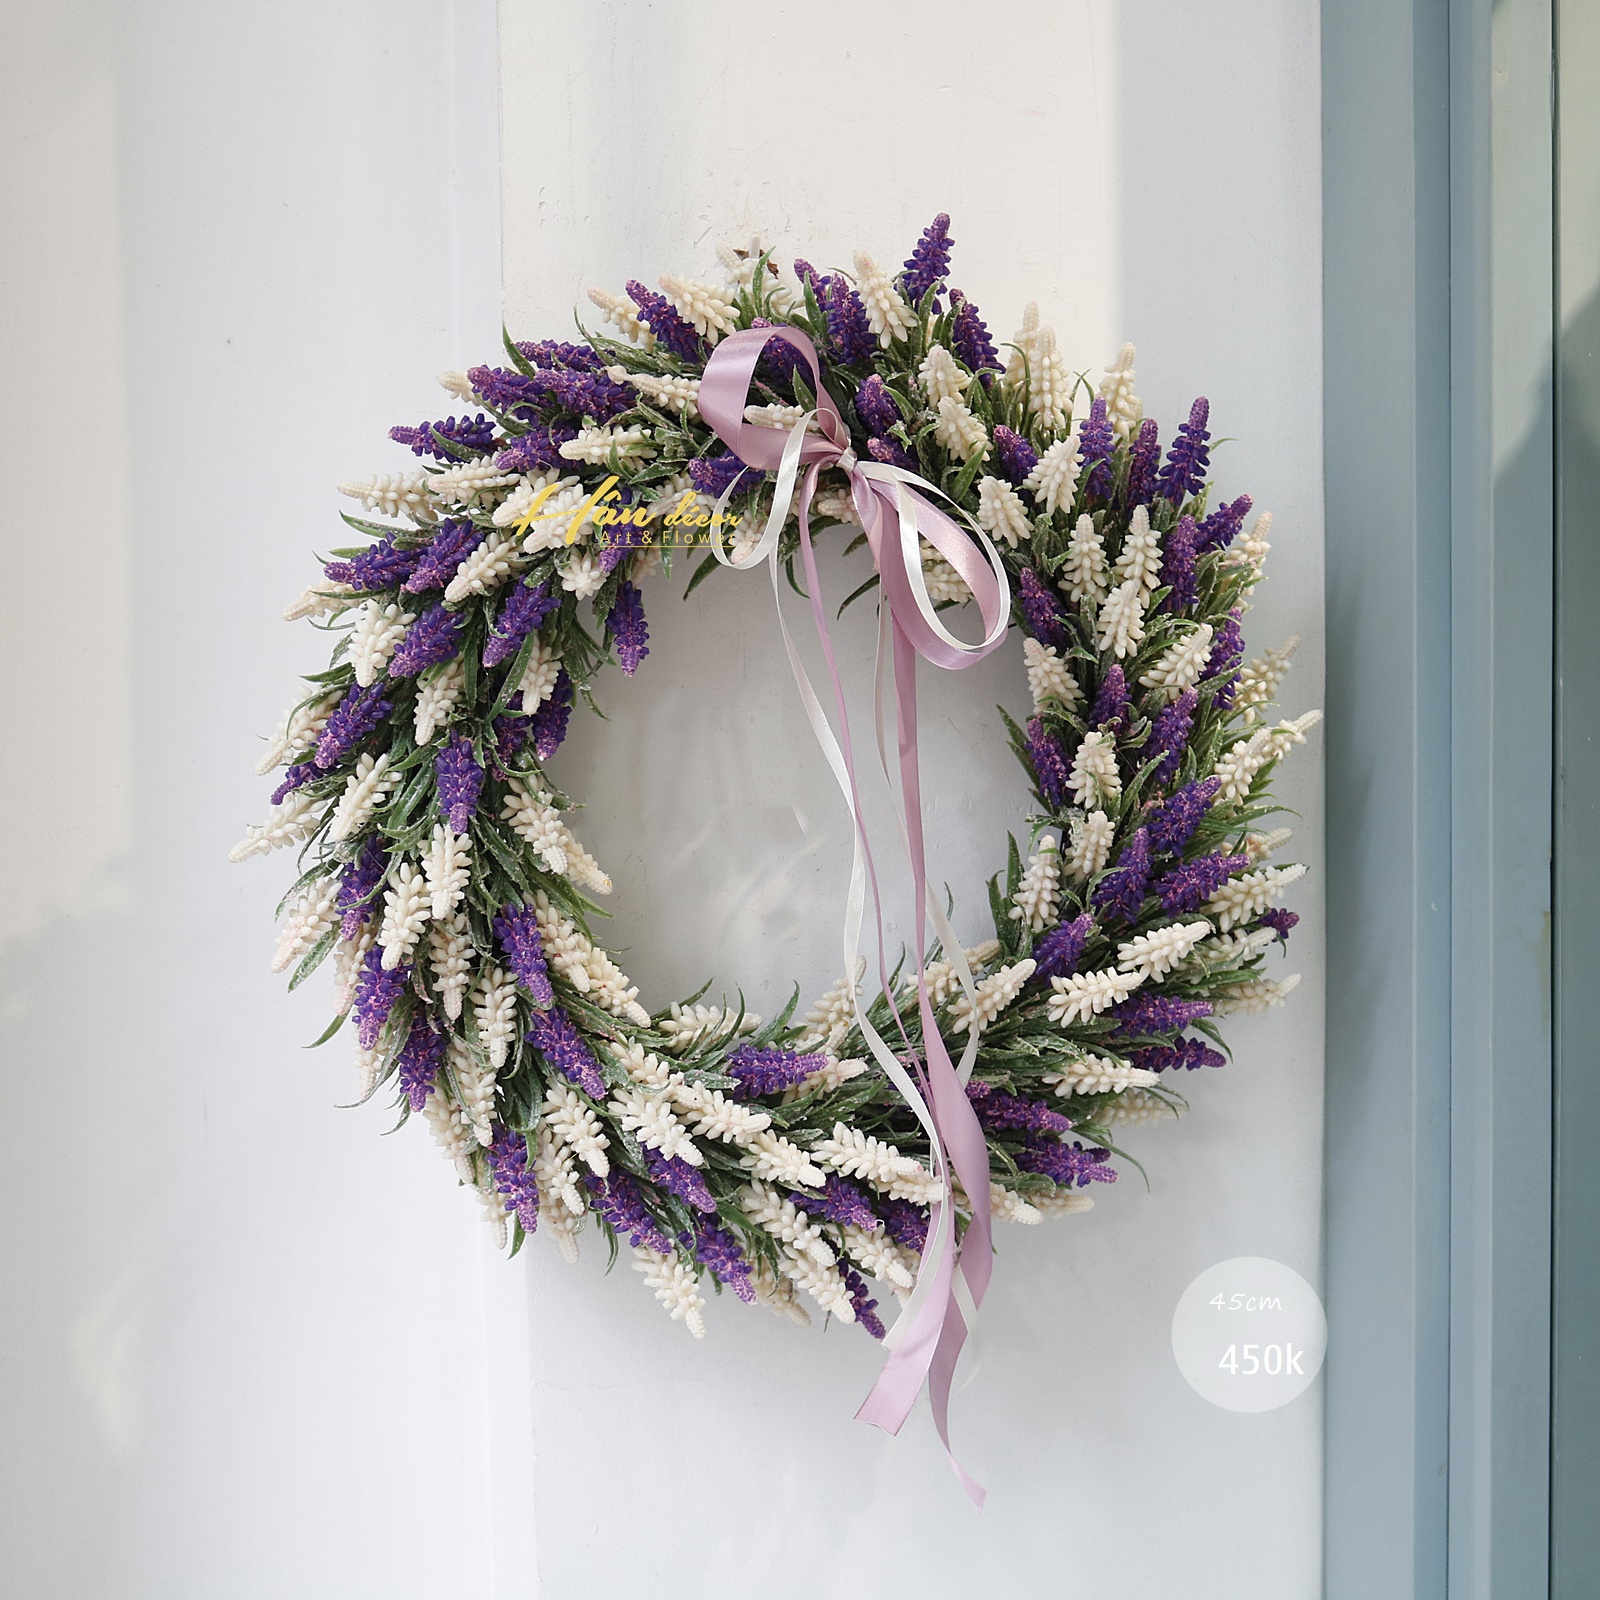 Vòng hoa lavender treo cửa